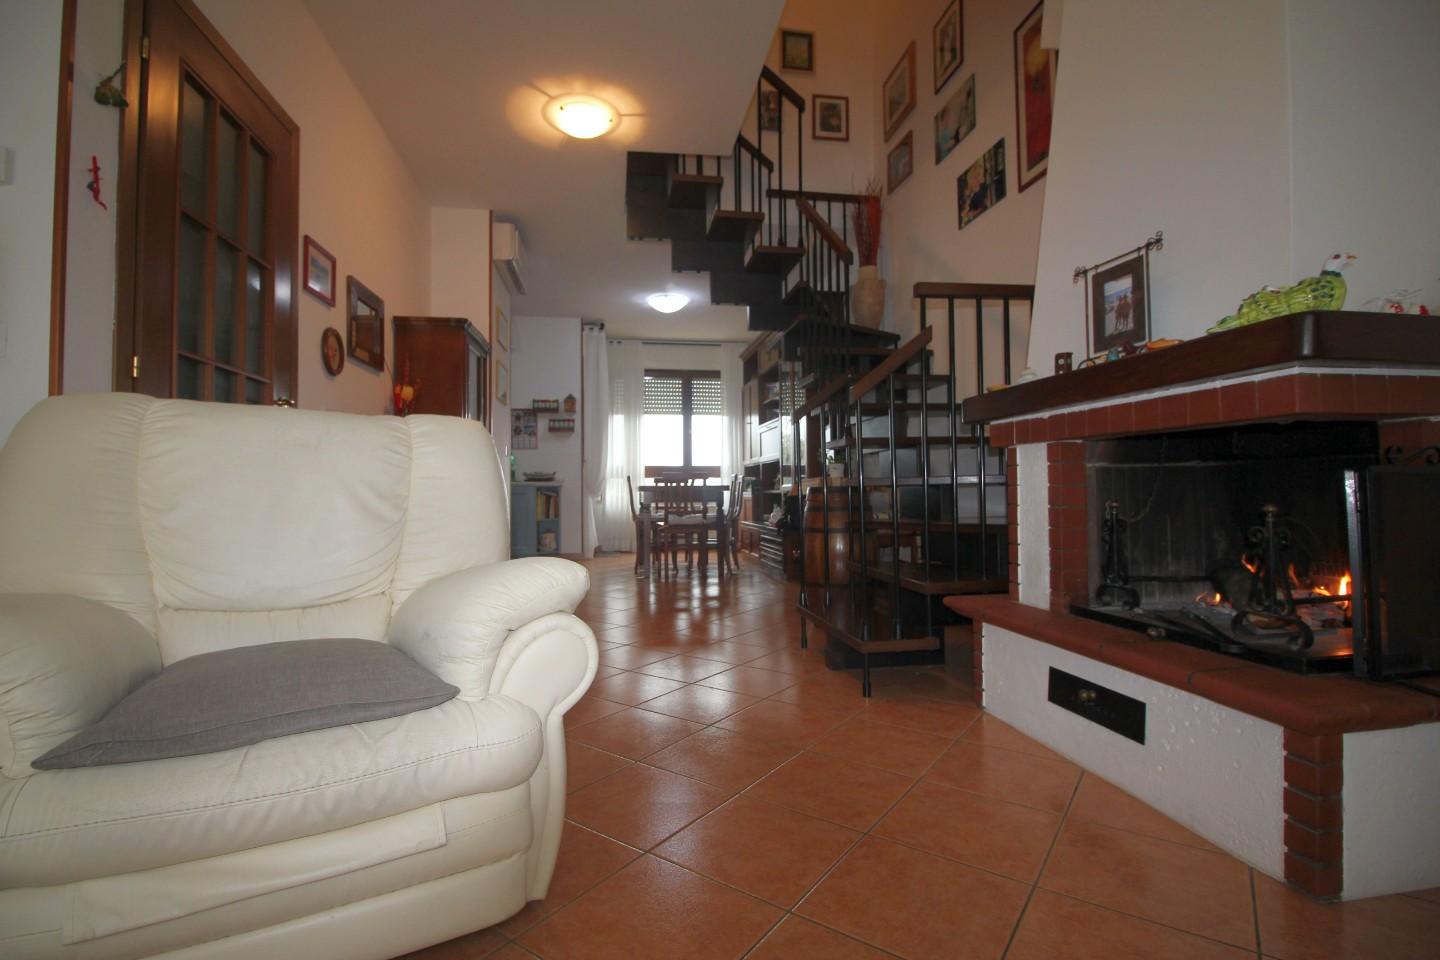 Apartment for sale in Monteroni d'Arbia (SI)